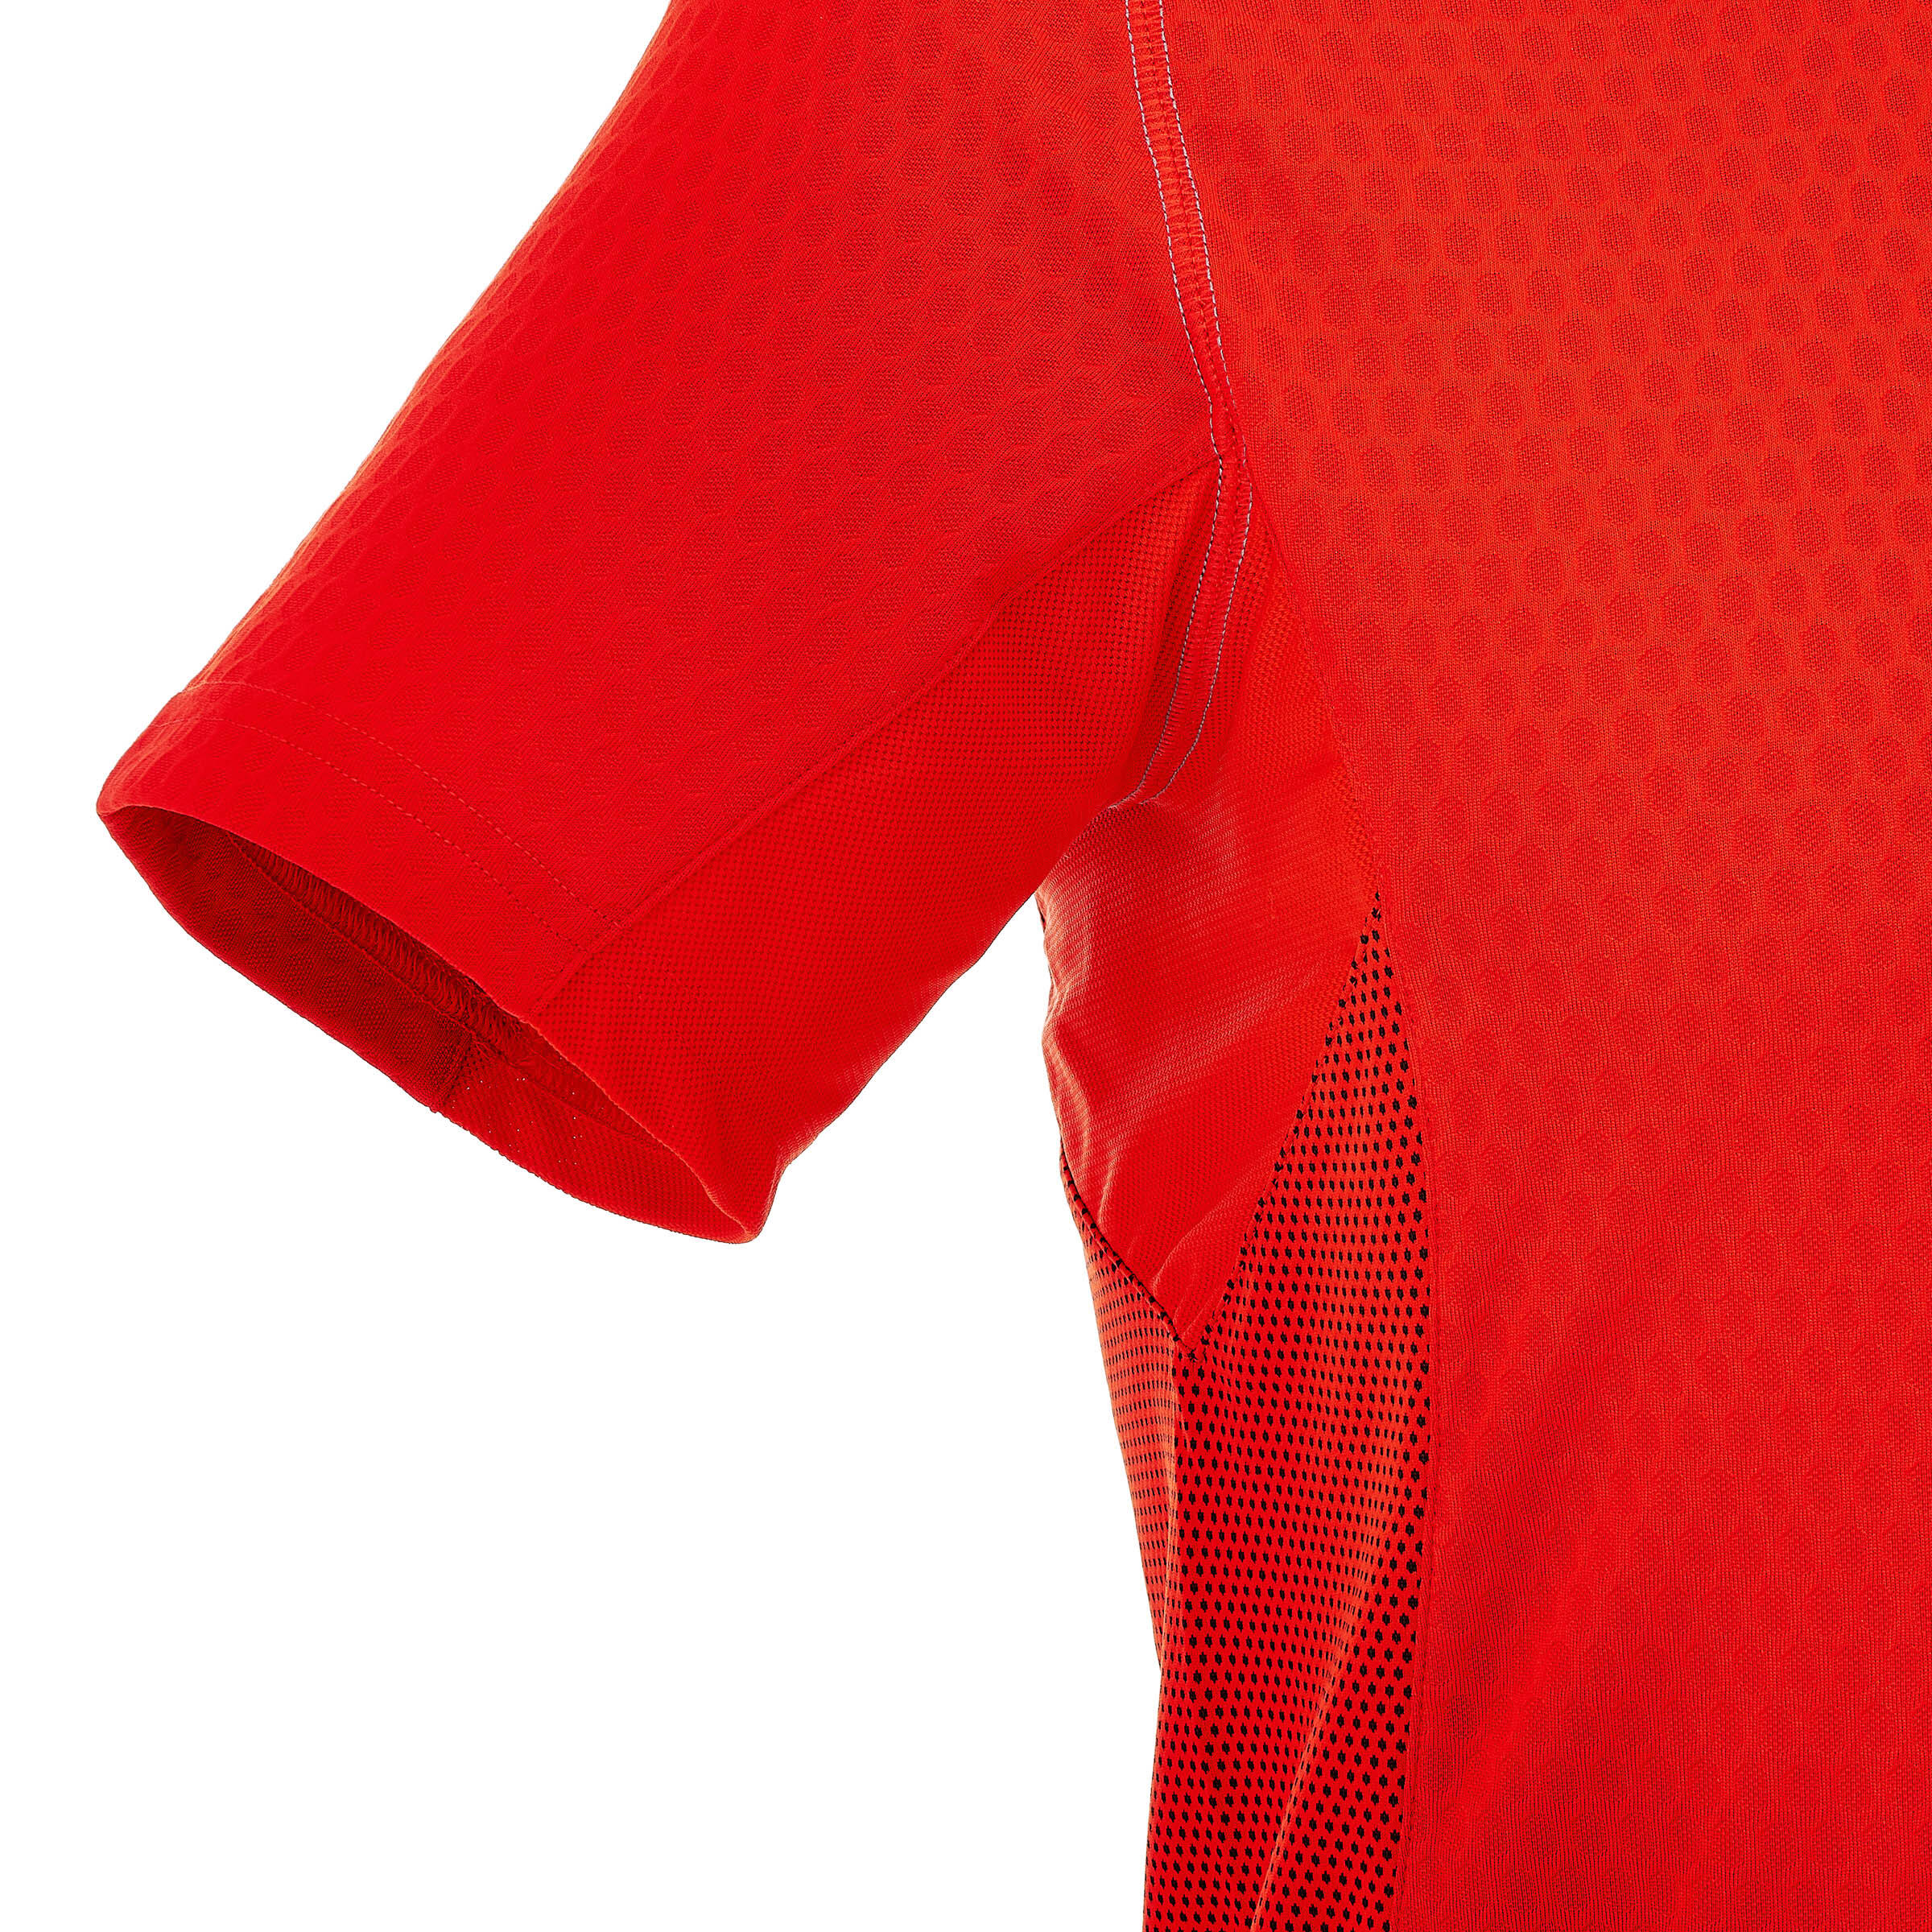 TechFRESH 500 Freeze Men's Short-Sleeve Hiking T-Shirt - Red 6/9